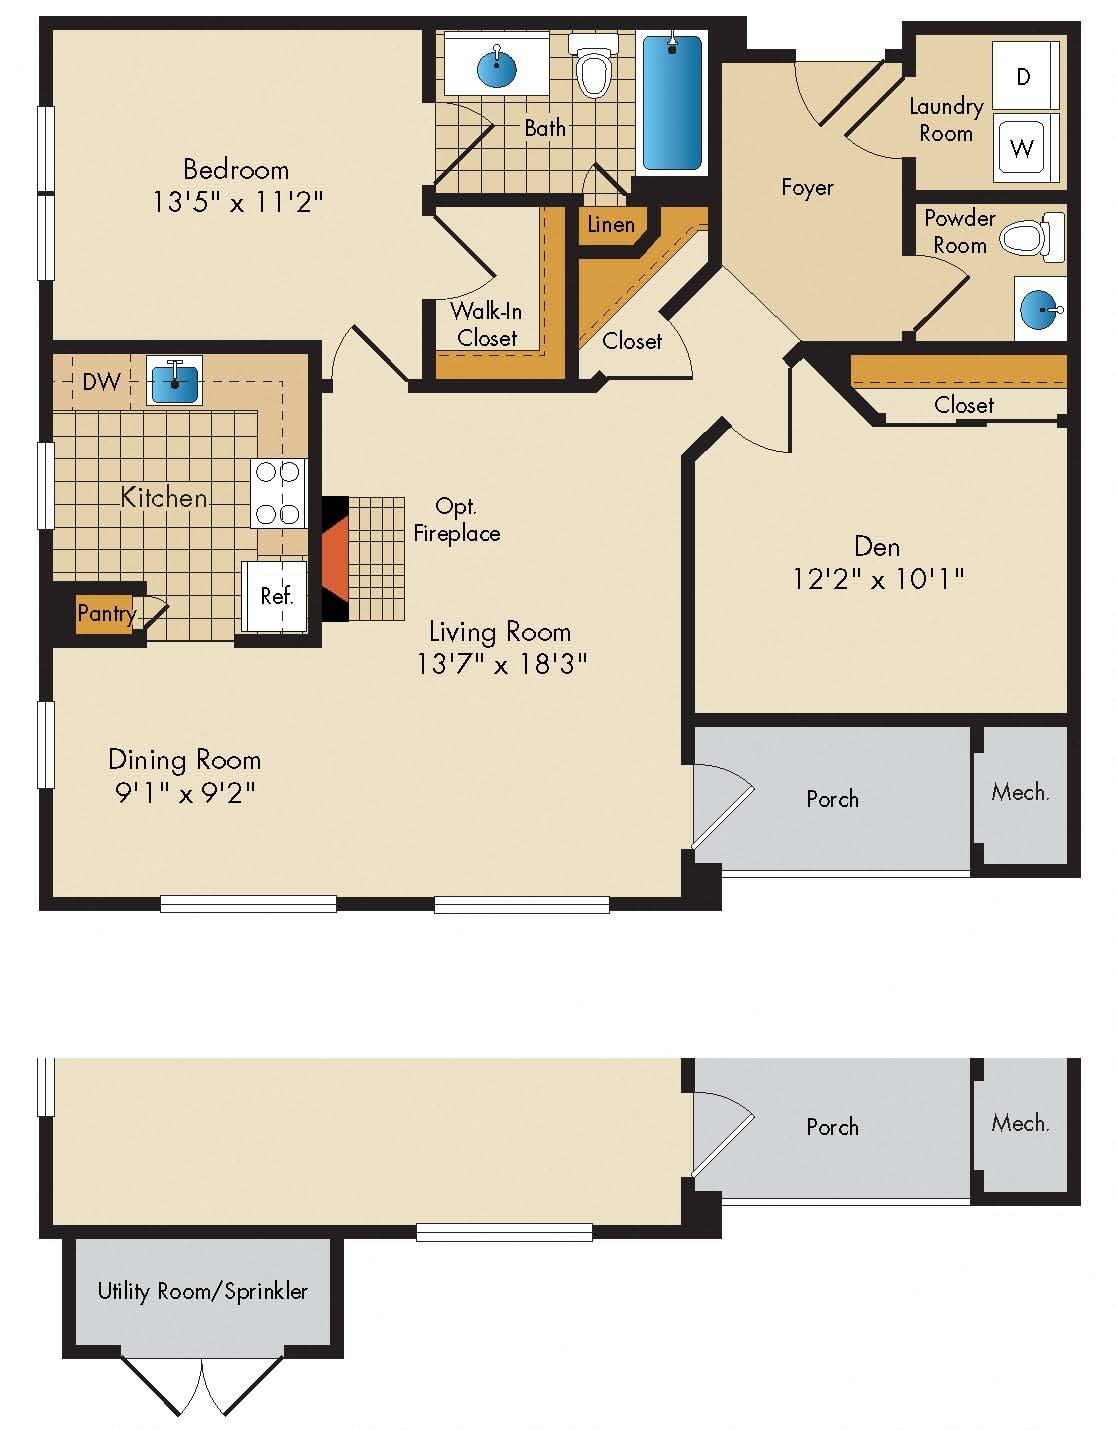 Apartment 250 floorplan